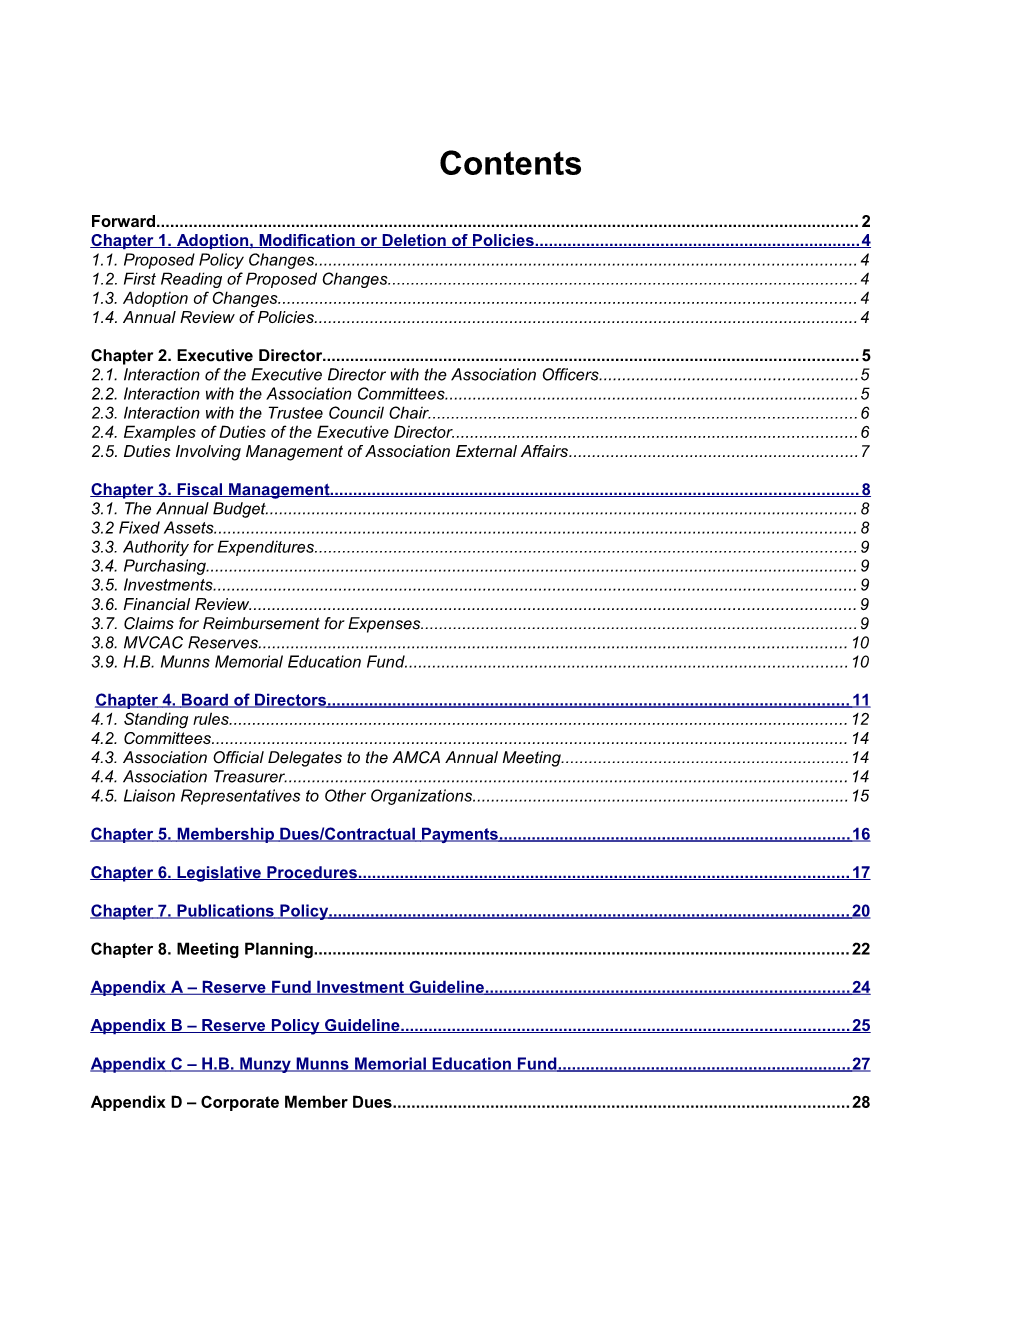 Manual of Administrative Policies